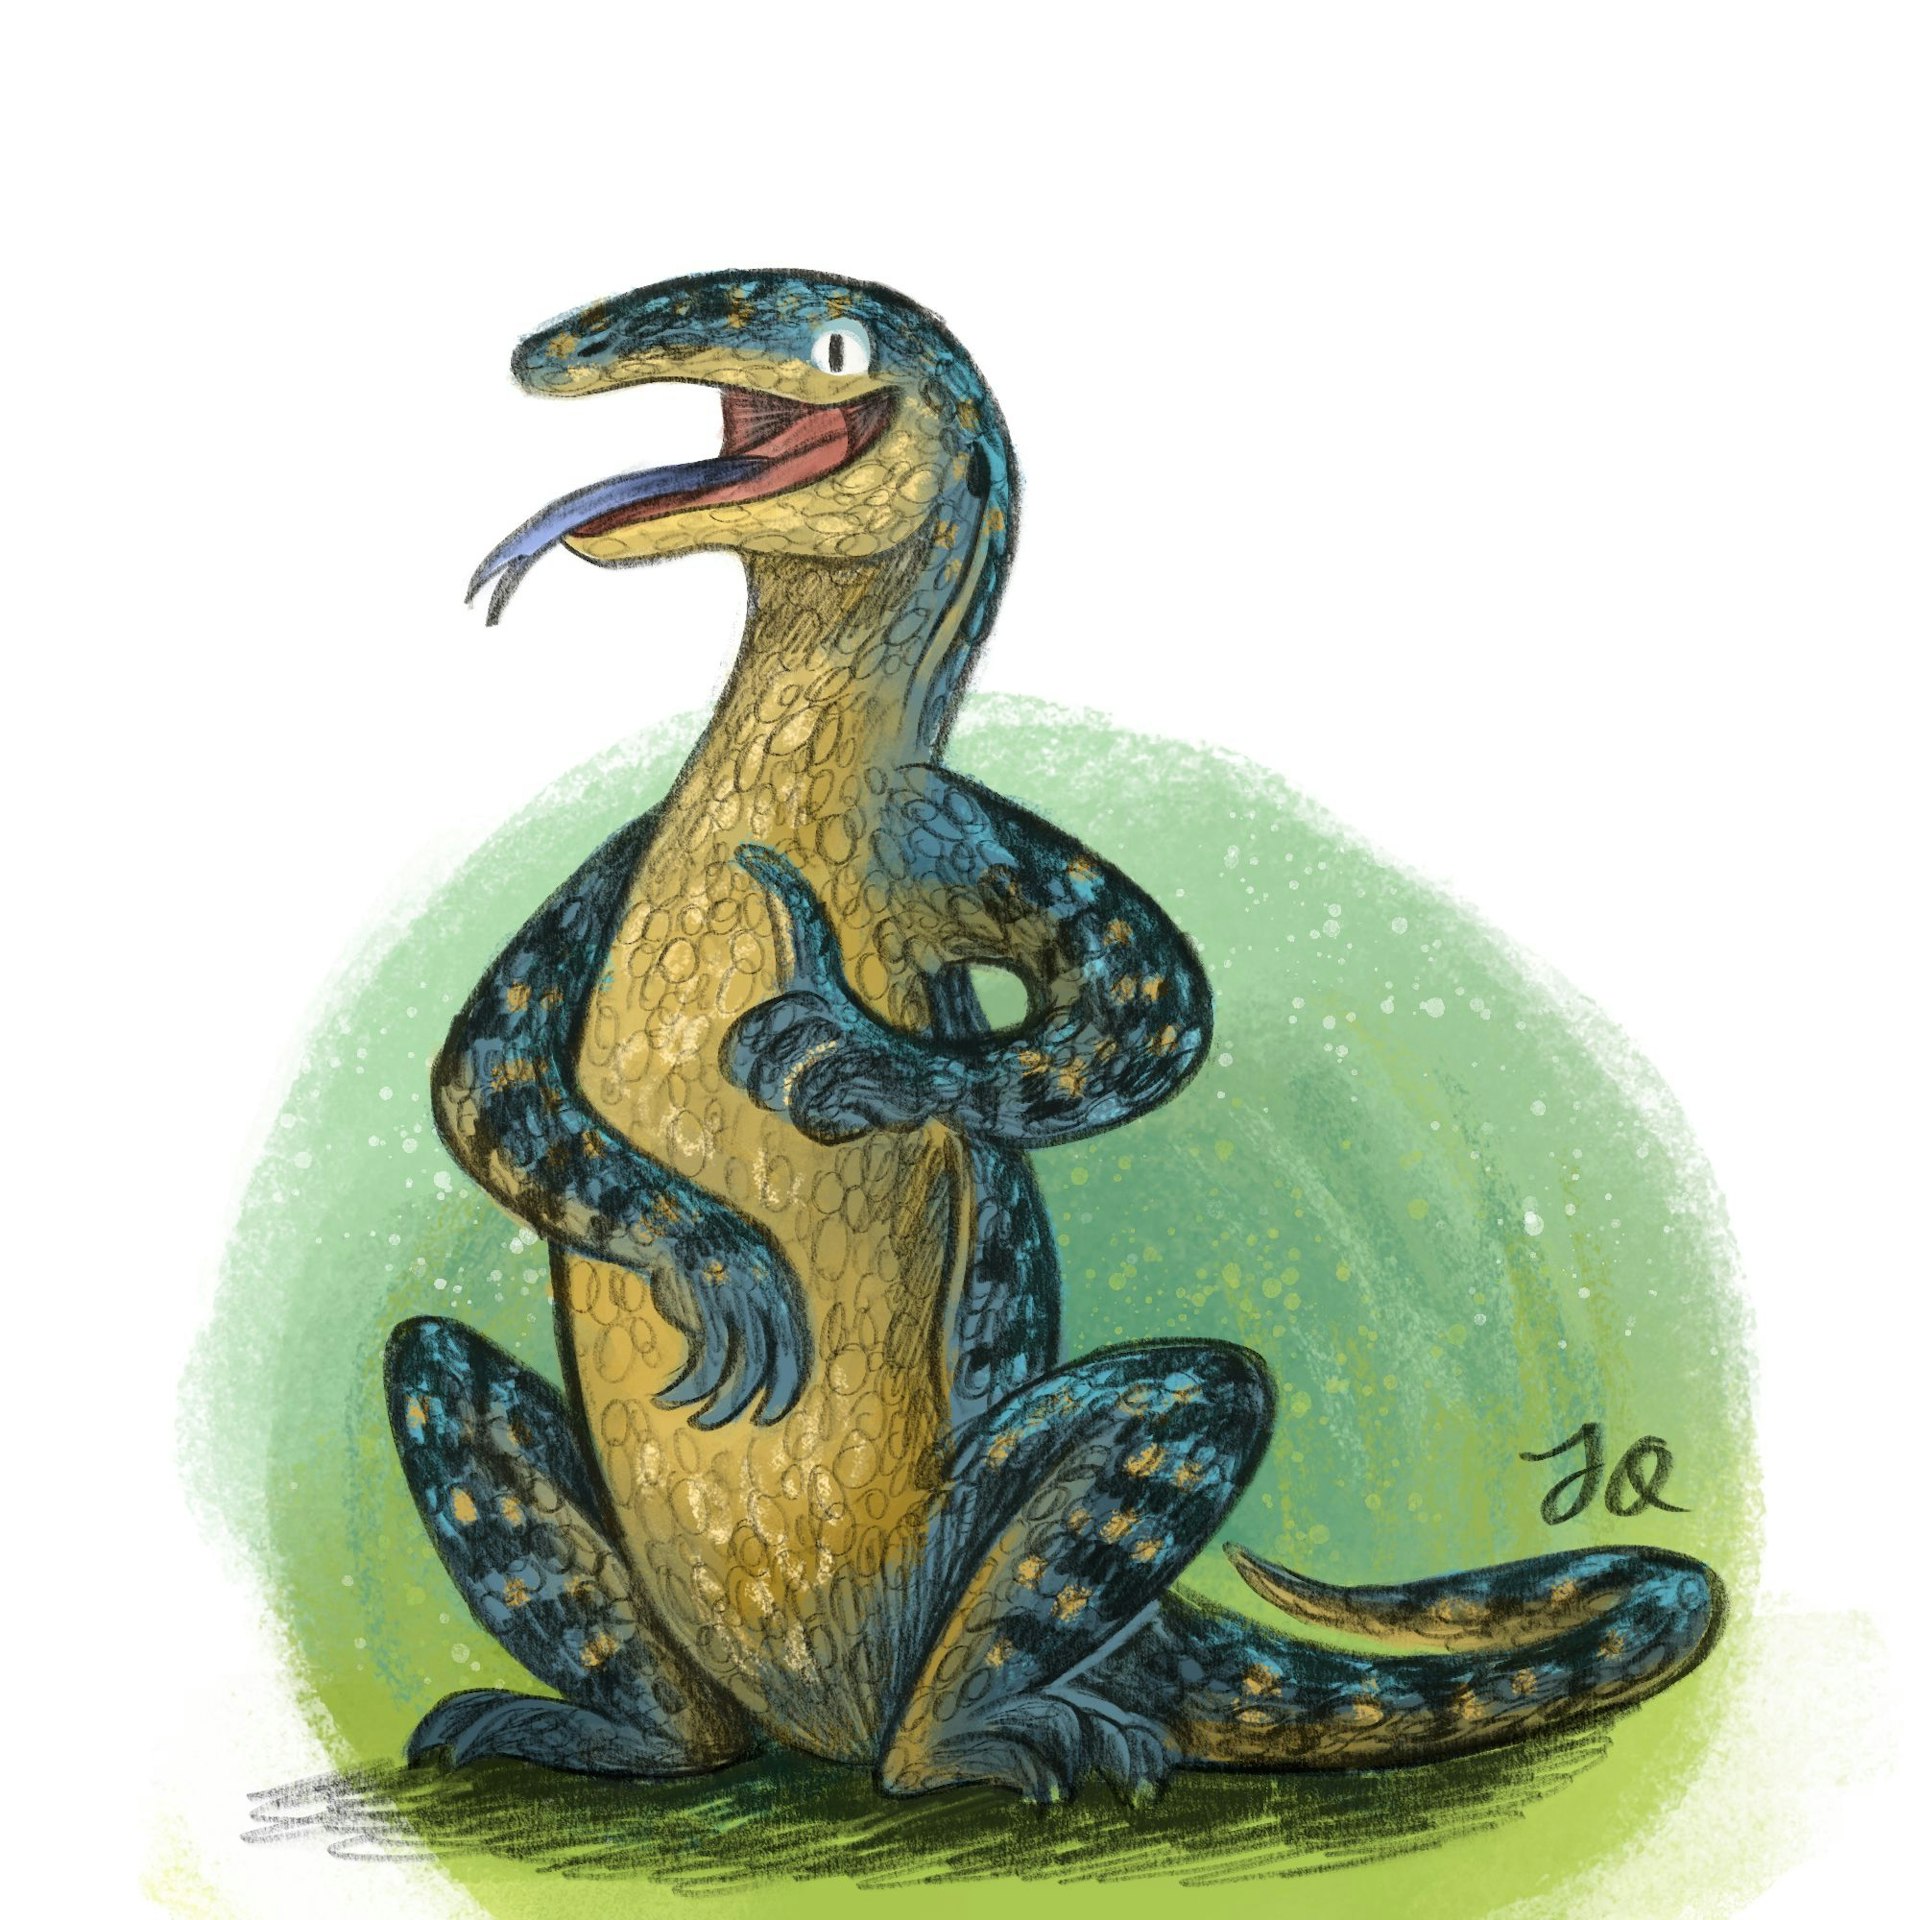 Character design of Monitor Lizard